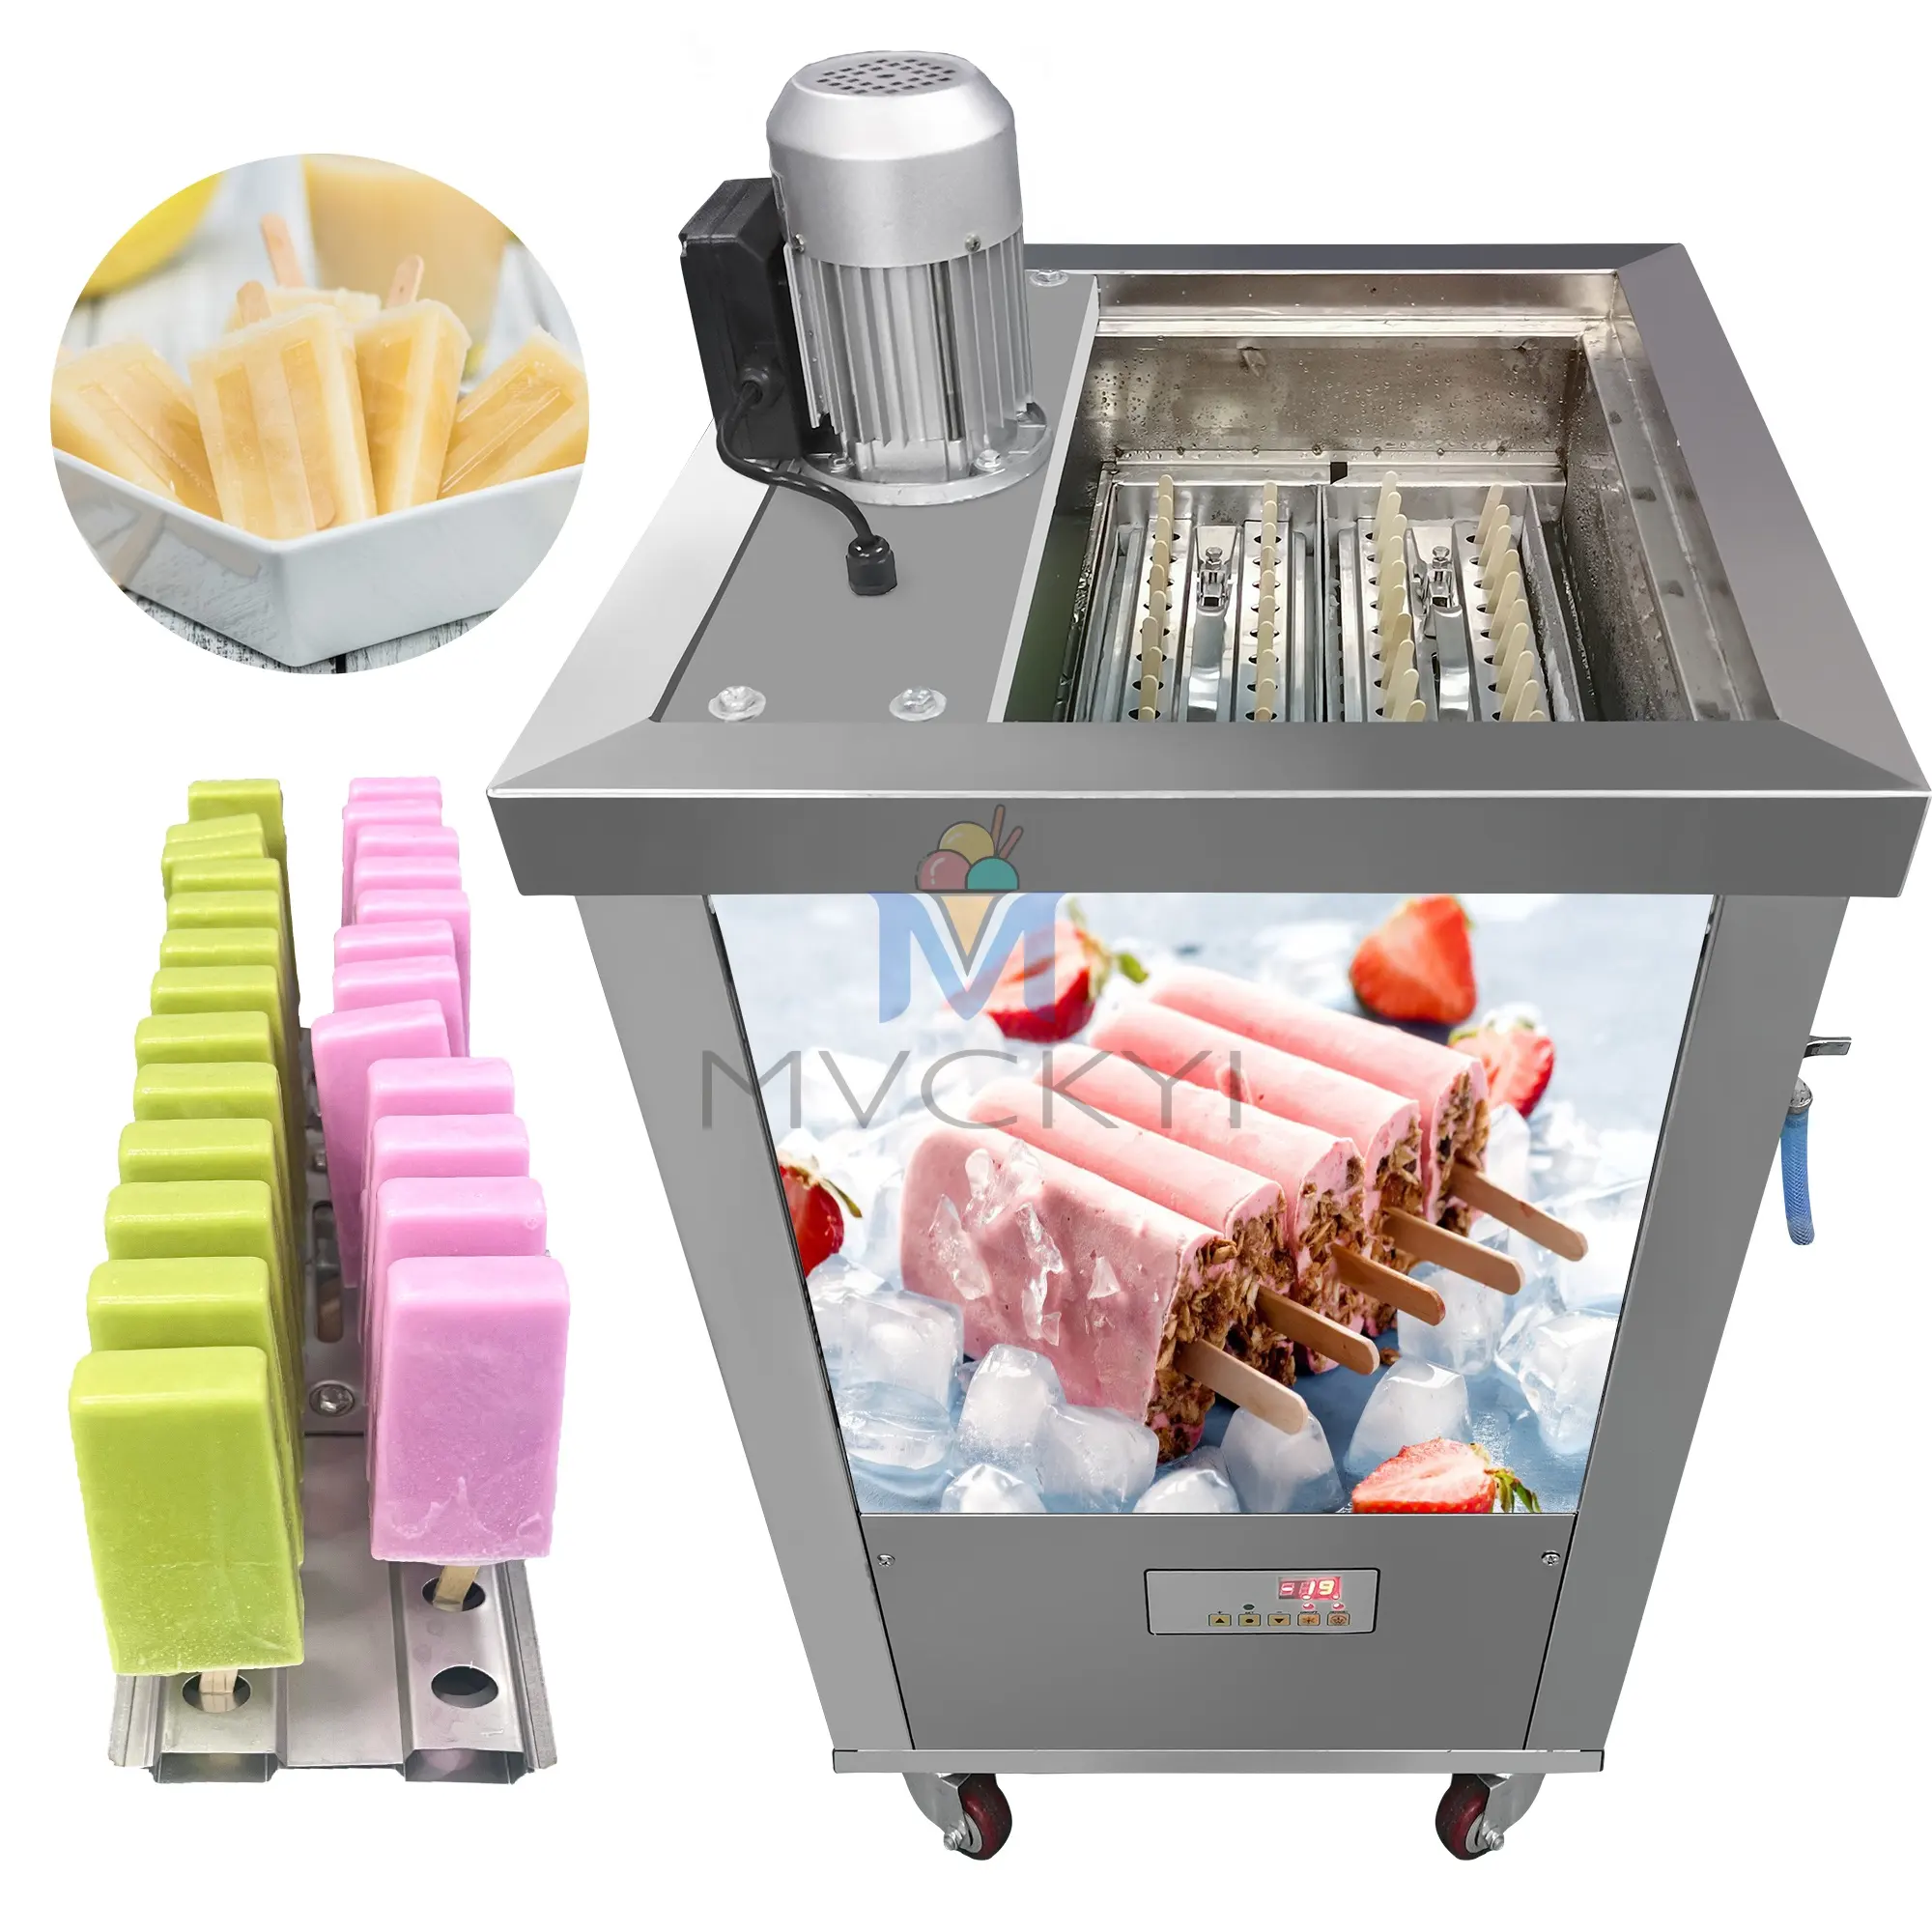 Mvckyi ठंड popsicle मशीन बर्फ lolly उपकरण छड़ी पॉप निर्माता स्टेनलेस स्टील जमे हुए आइस क्रीम चबूतरे निर्माता